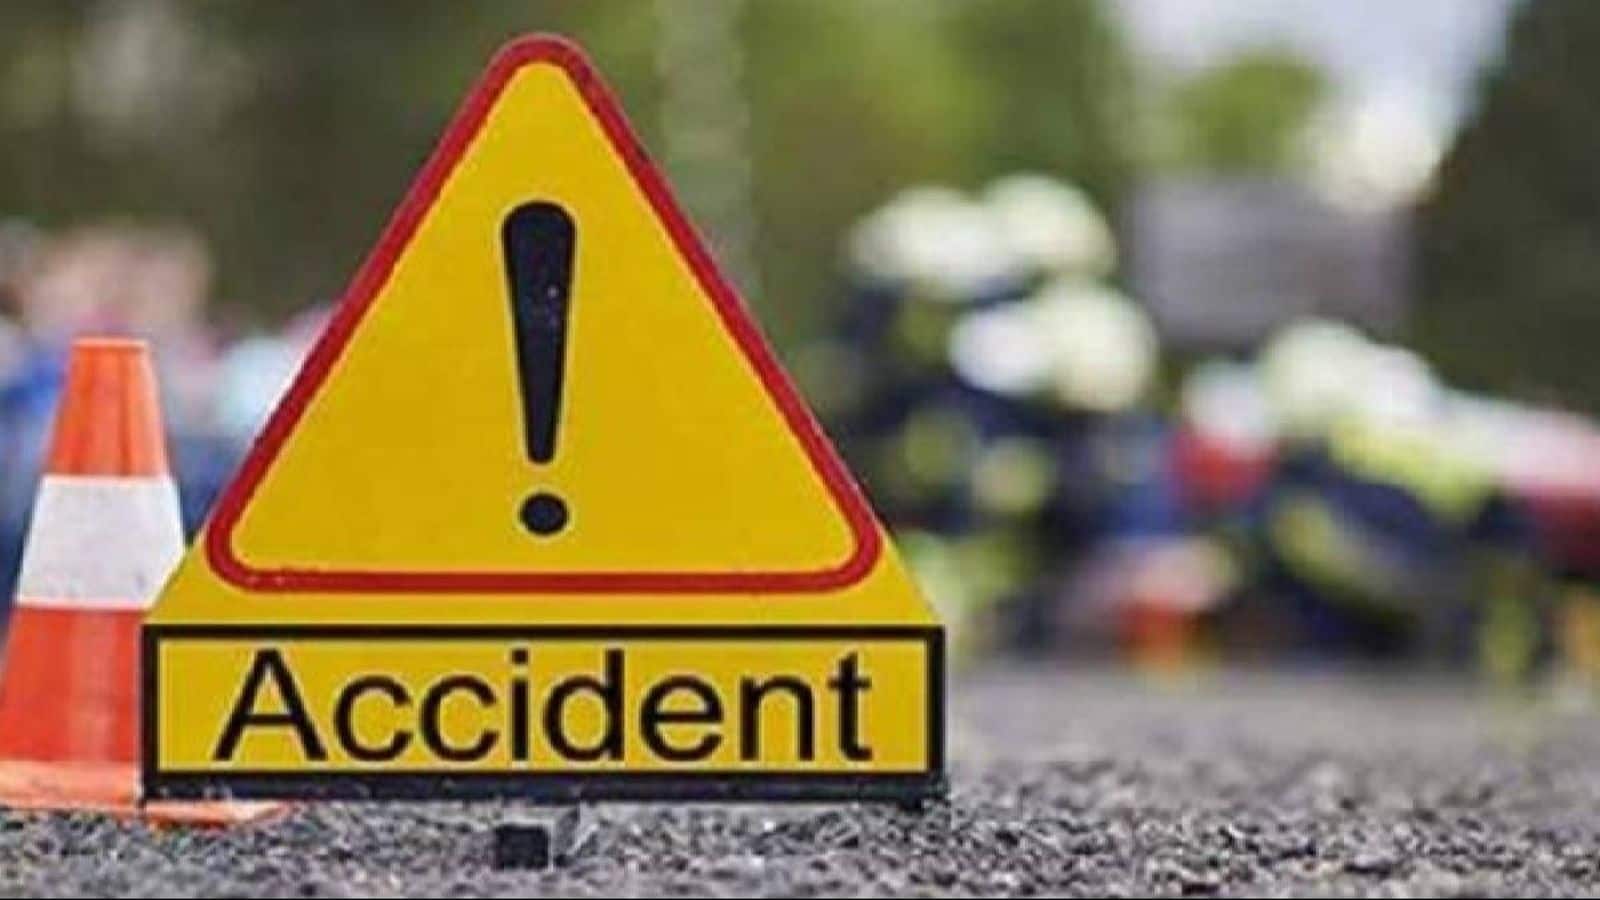 Kerala: 2 men killed after bike sandwiched between 2 buses